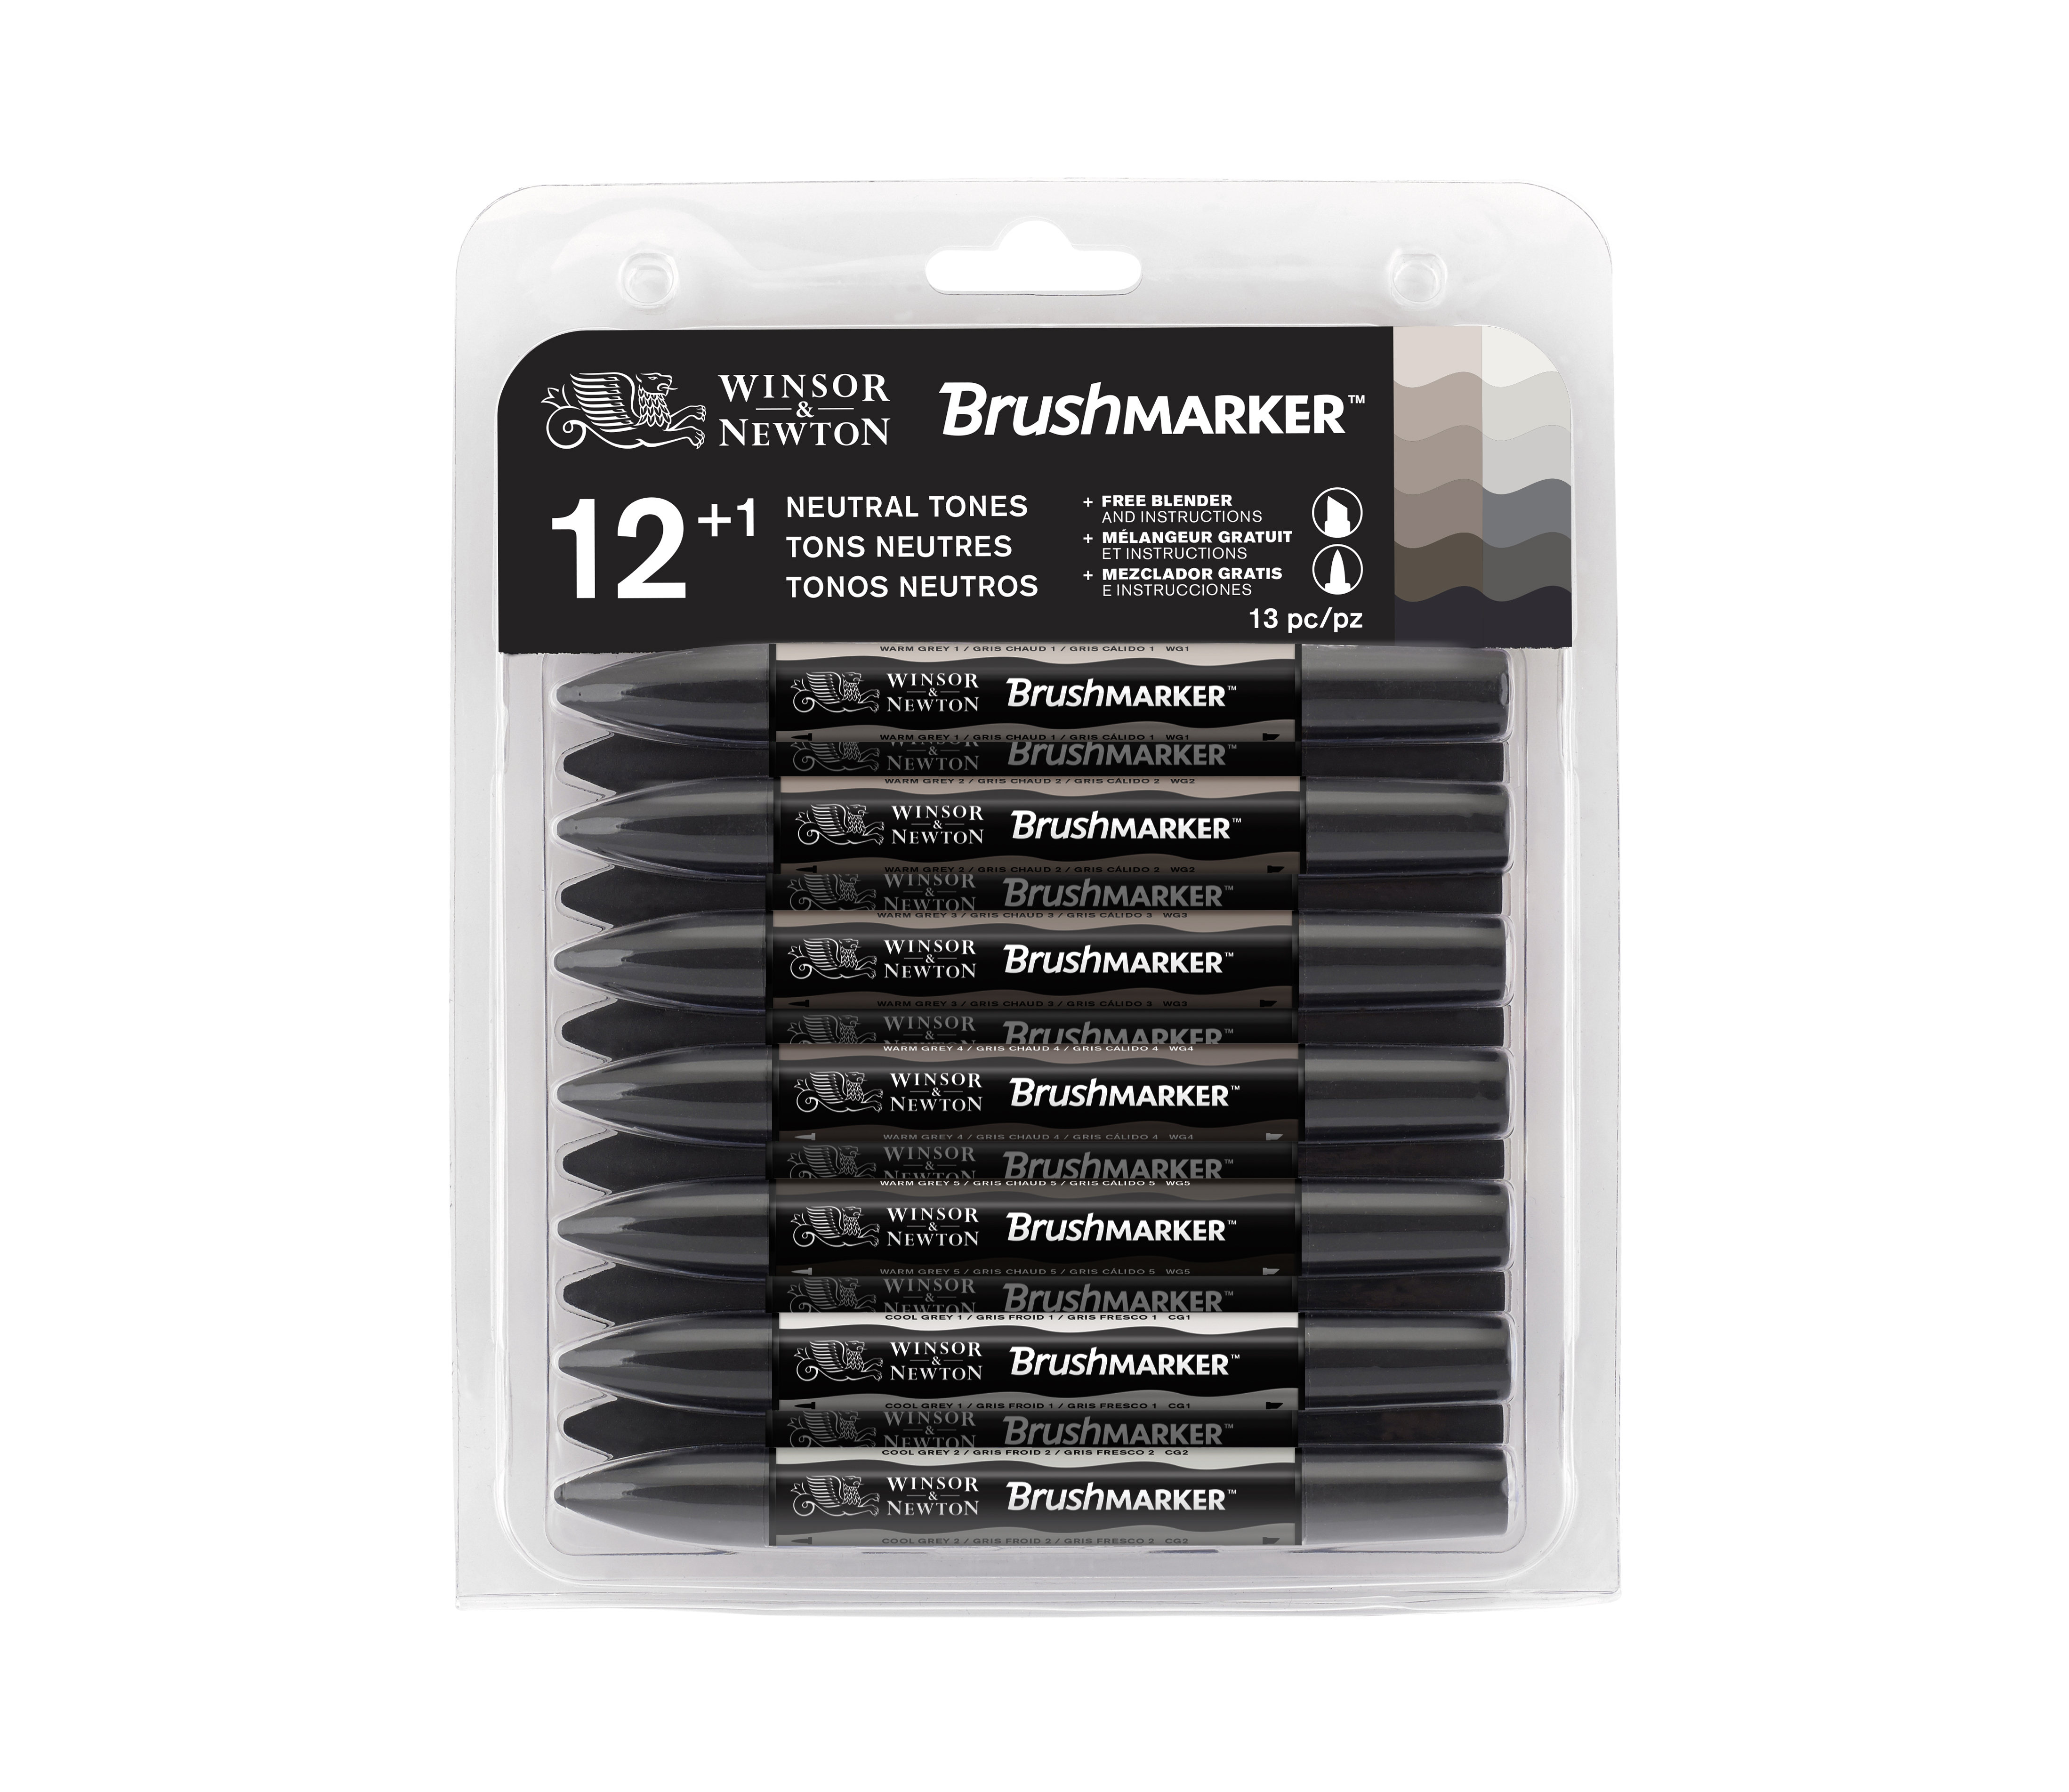 Pack Brushmarker 12+1 tonos neutros